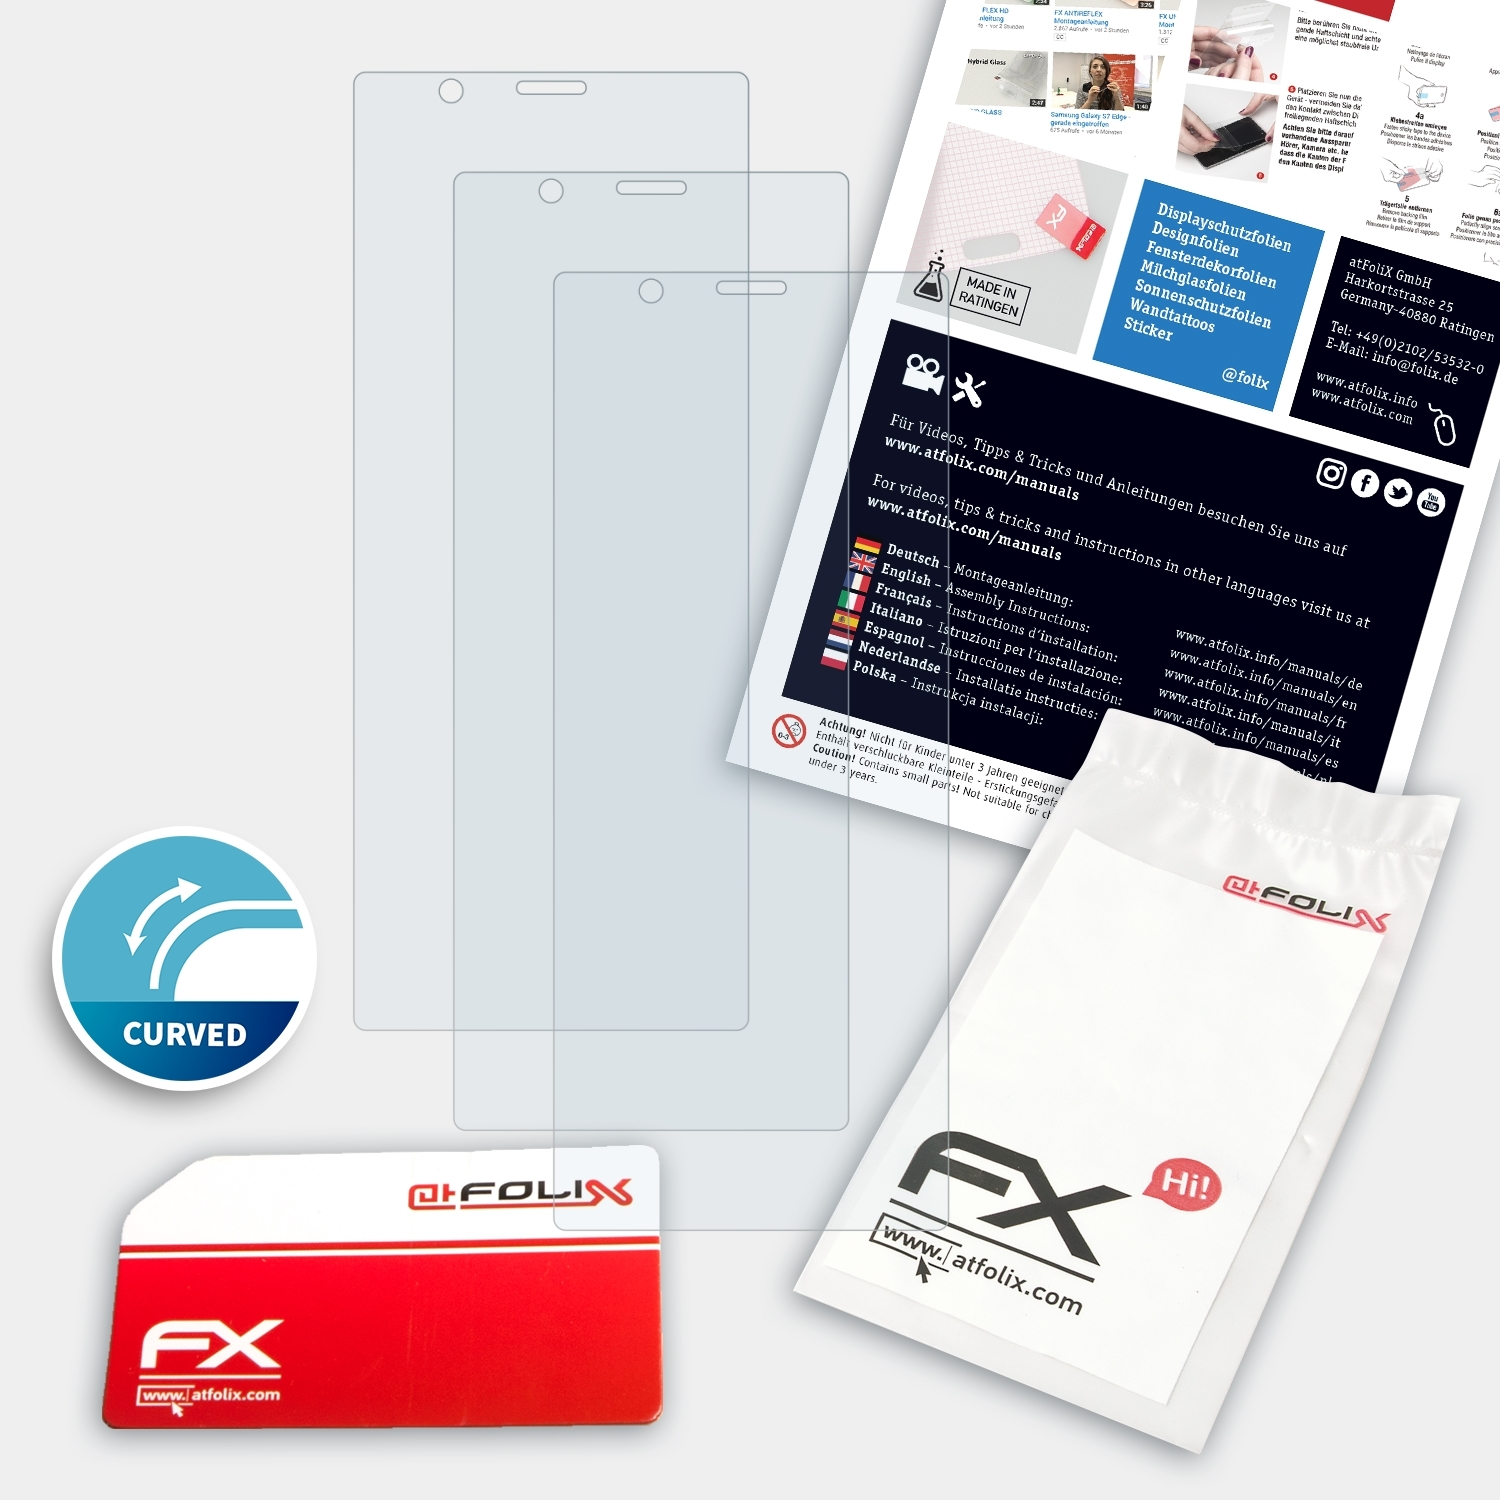 ATFOLIX 3x FX-ActiFleX 5) Displayschutz(für Xperia Sony